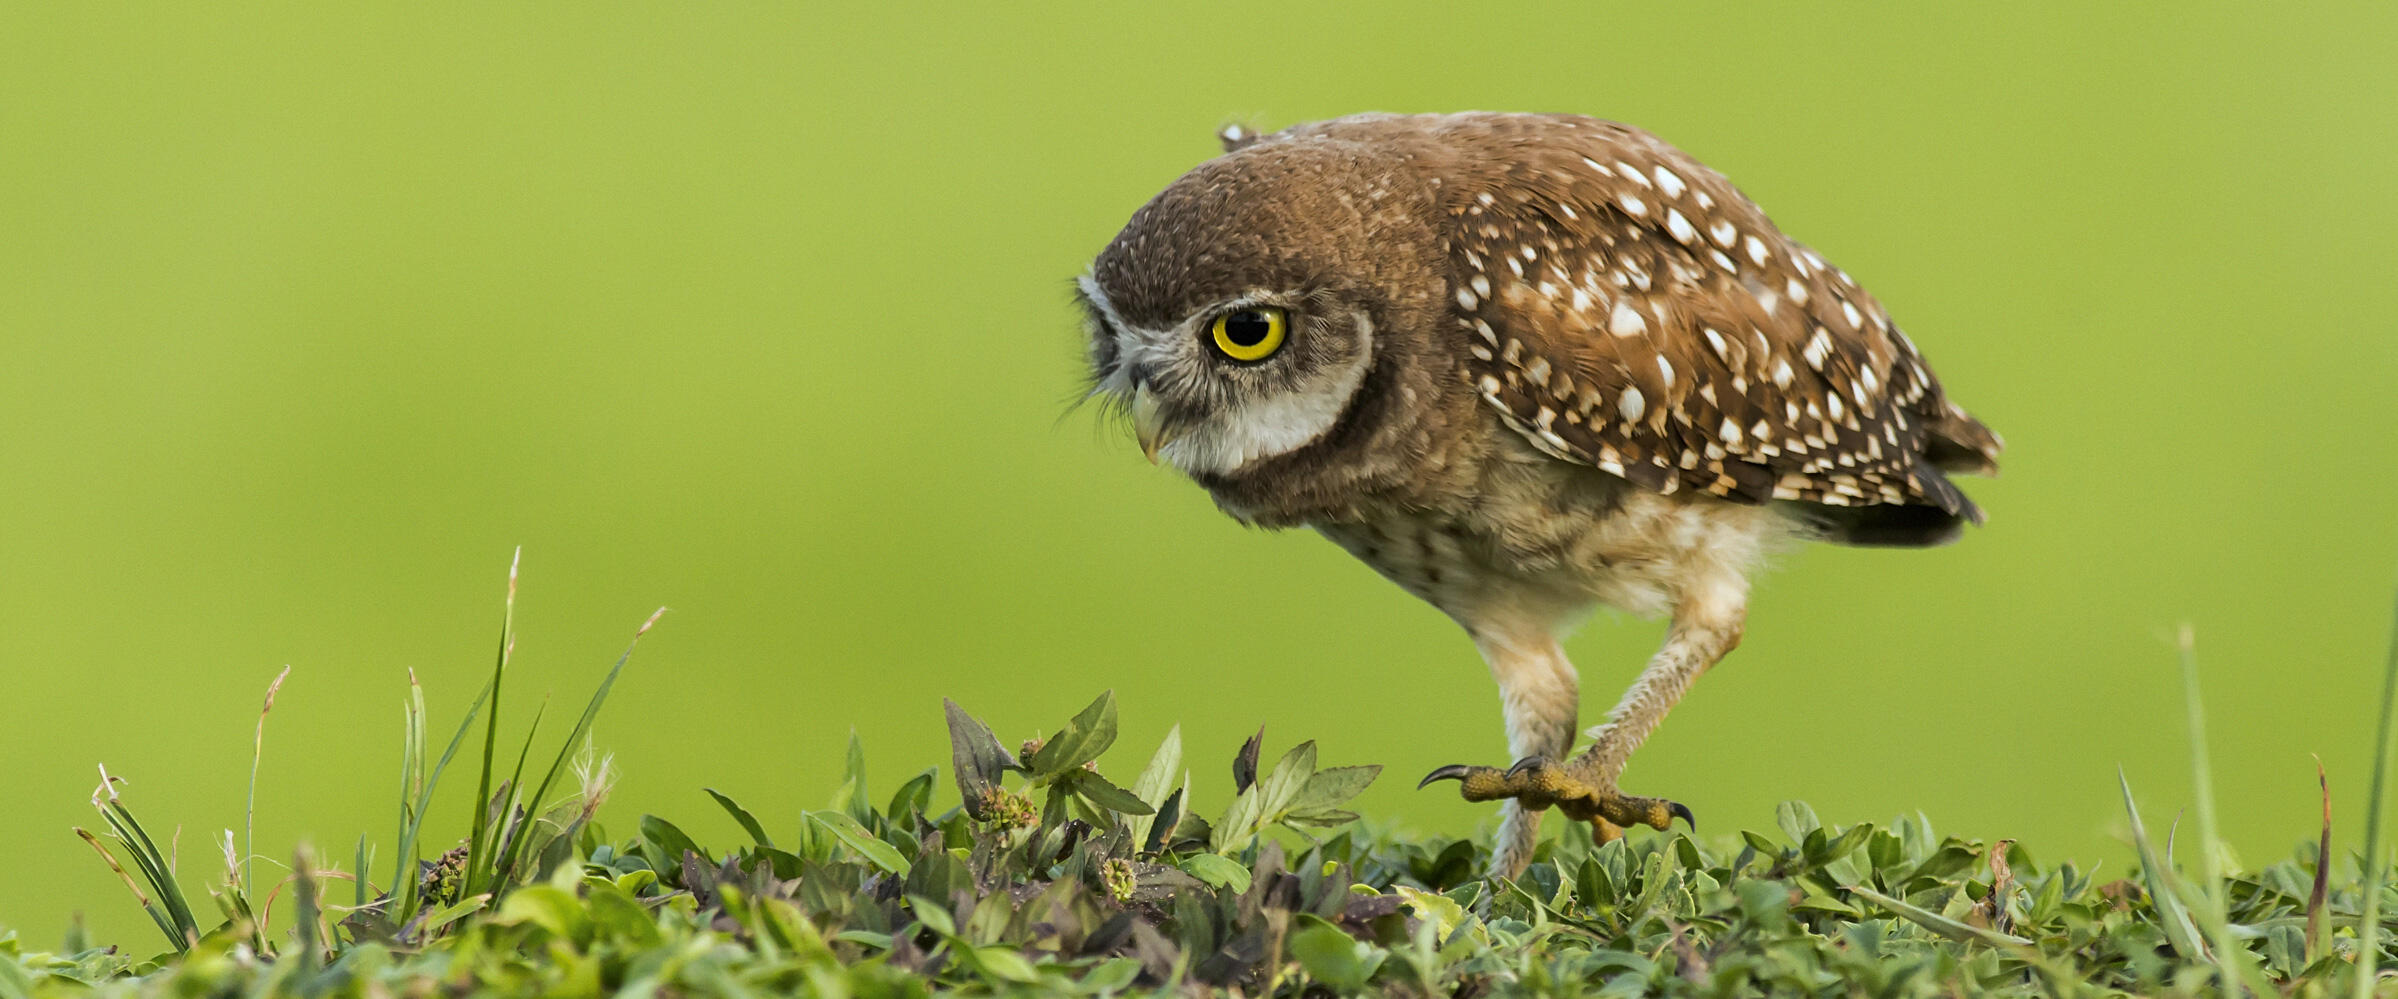 A Burrowing Owl walks on green vegetation.